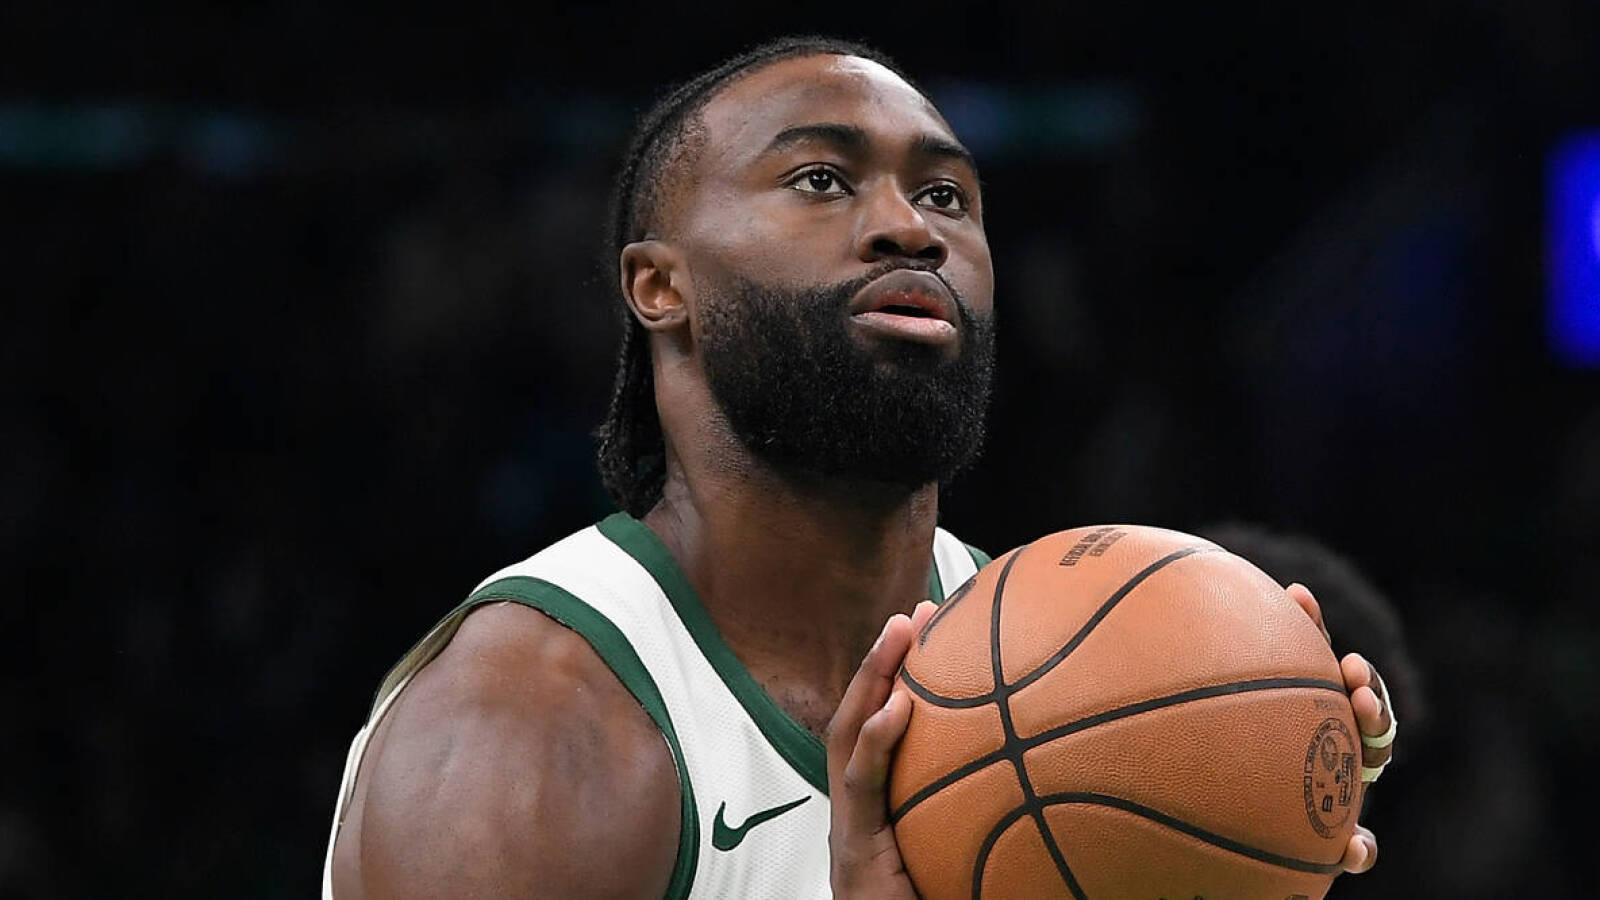 Watch: Jaylen Brown's dunk helps Celtics get off to fast start vs. Heat